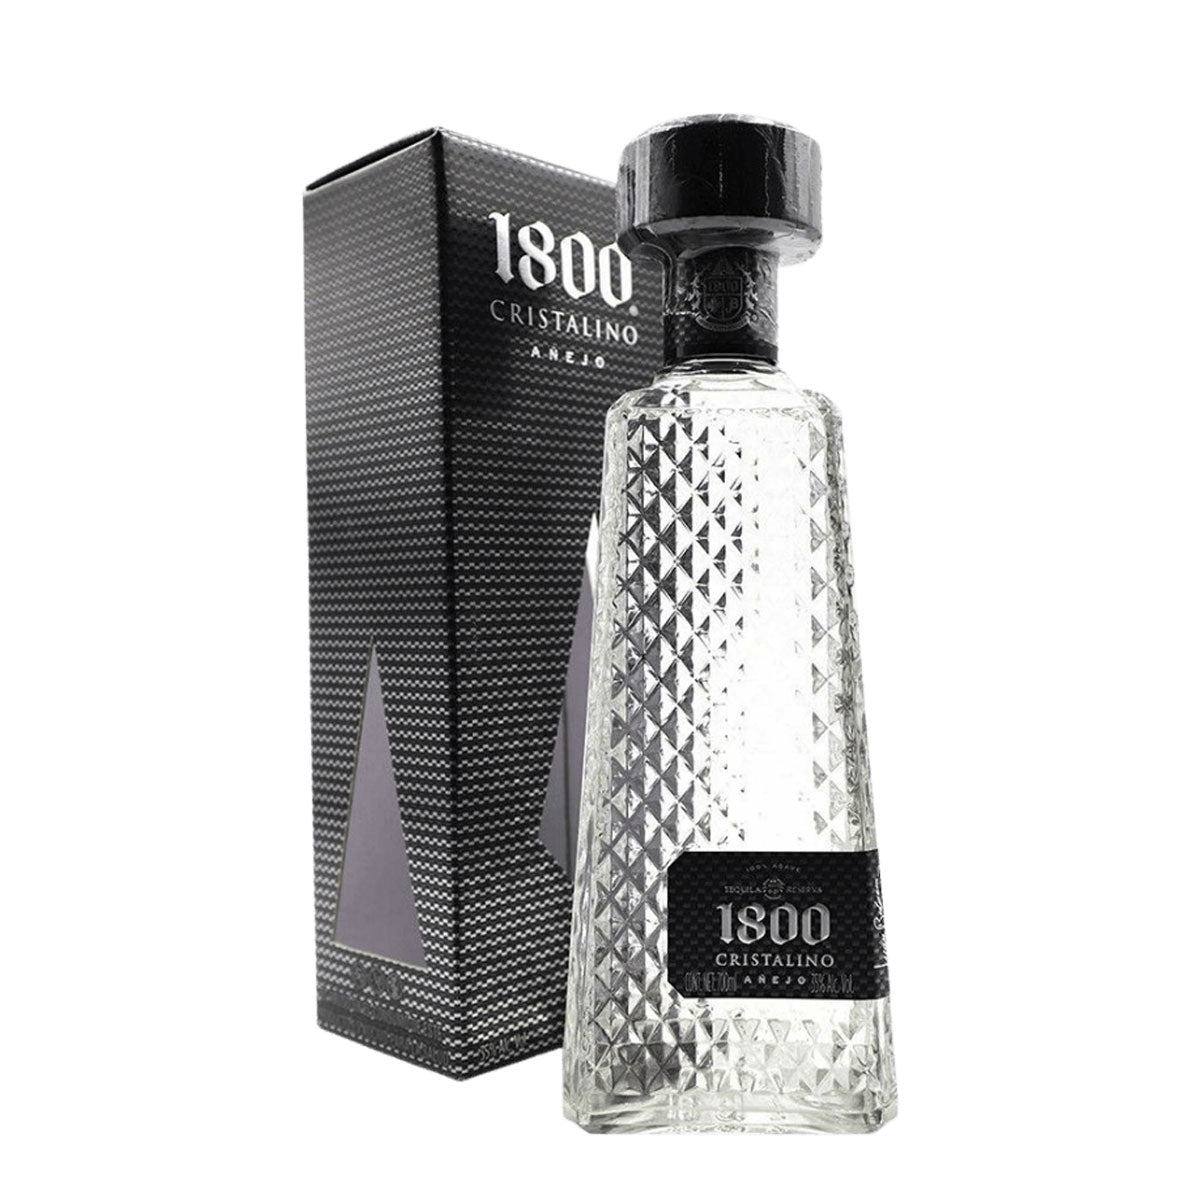 TAG Liquor Stores BC - 1800 Cristalino Anejo Tequila 750ml